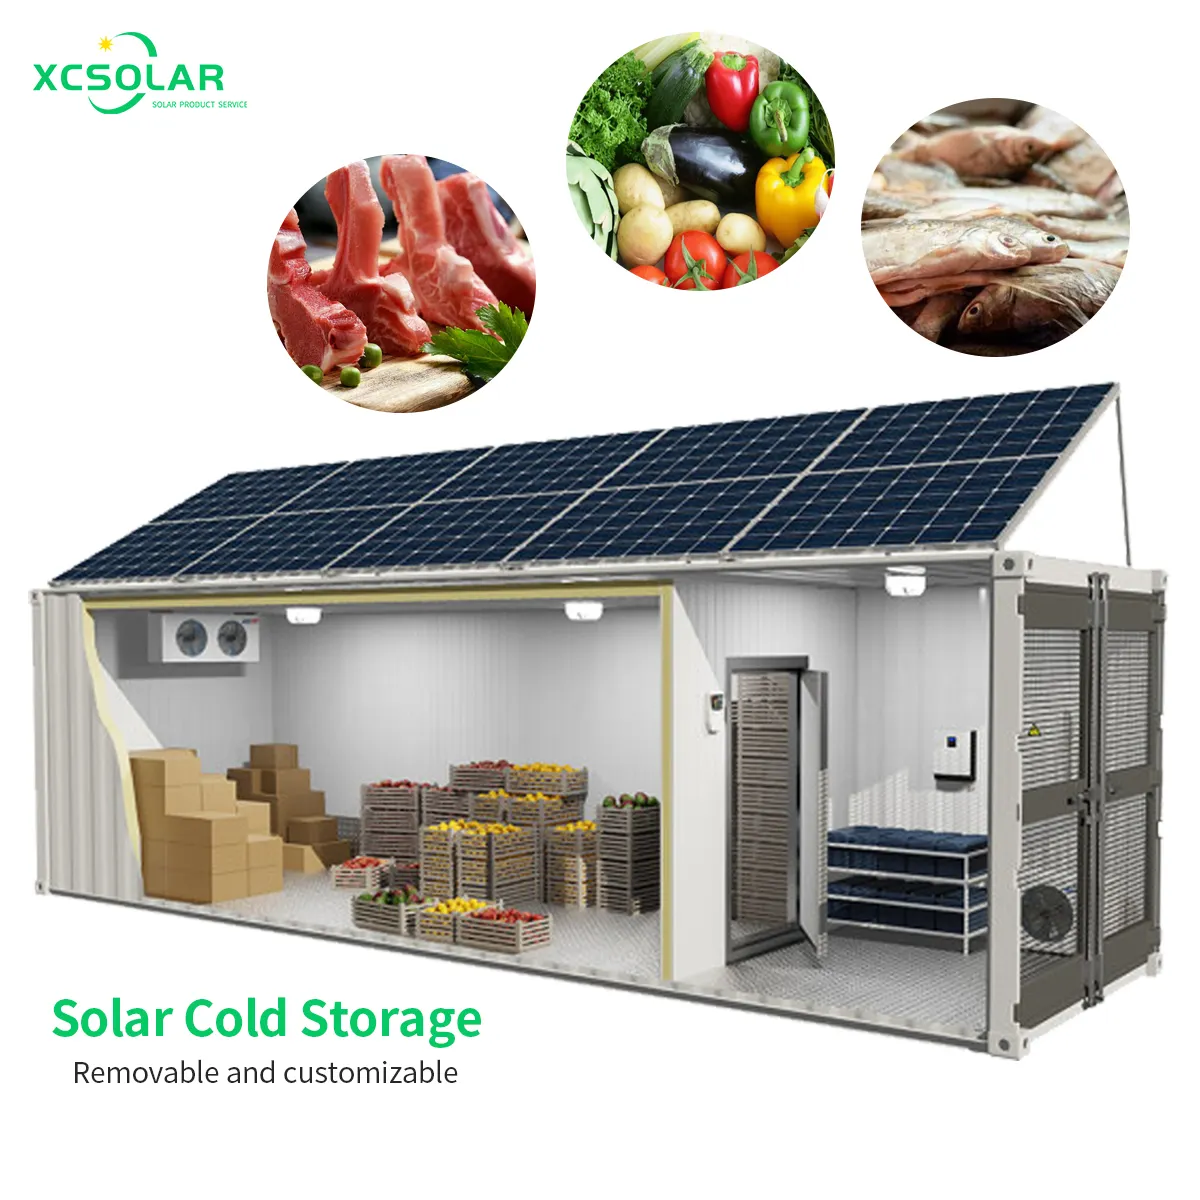 XCブランドの冷凍庫コンテナ冷蔵室コンテナ魚肉野菜アイスストア用ソーラーパワー冷蔵室